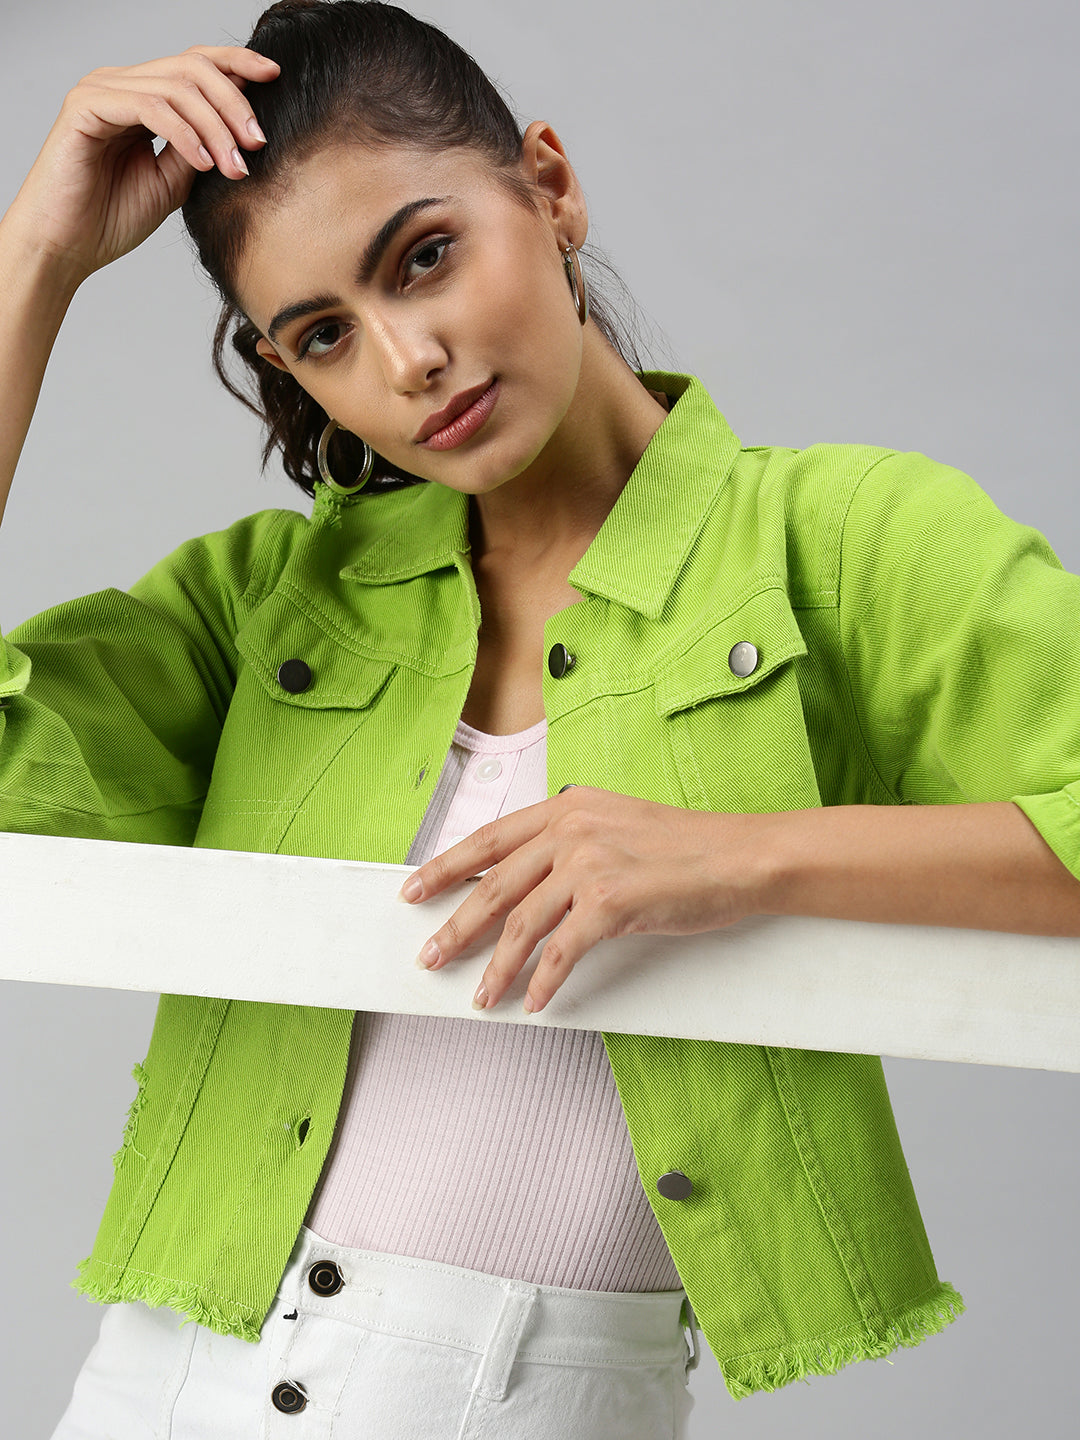 Women's Green Solid Denim Jacket Jackets